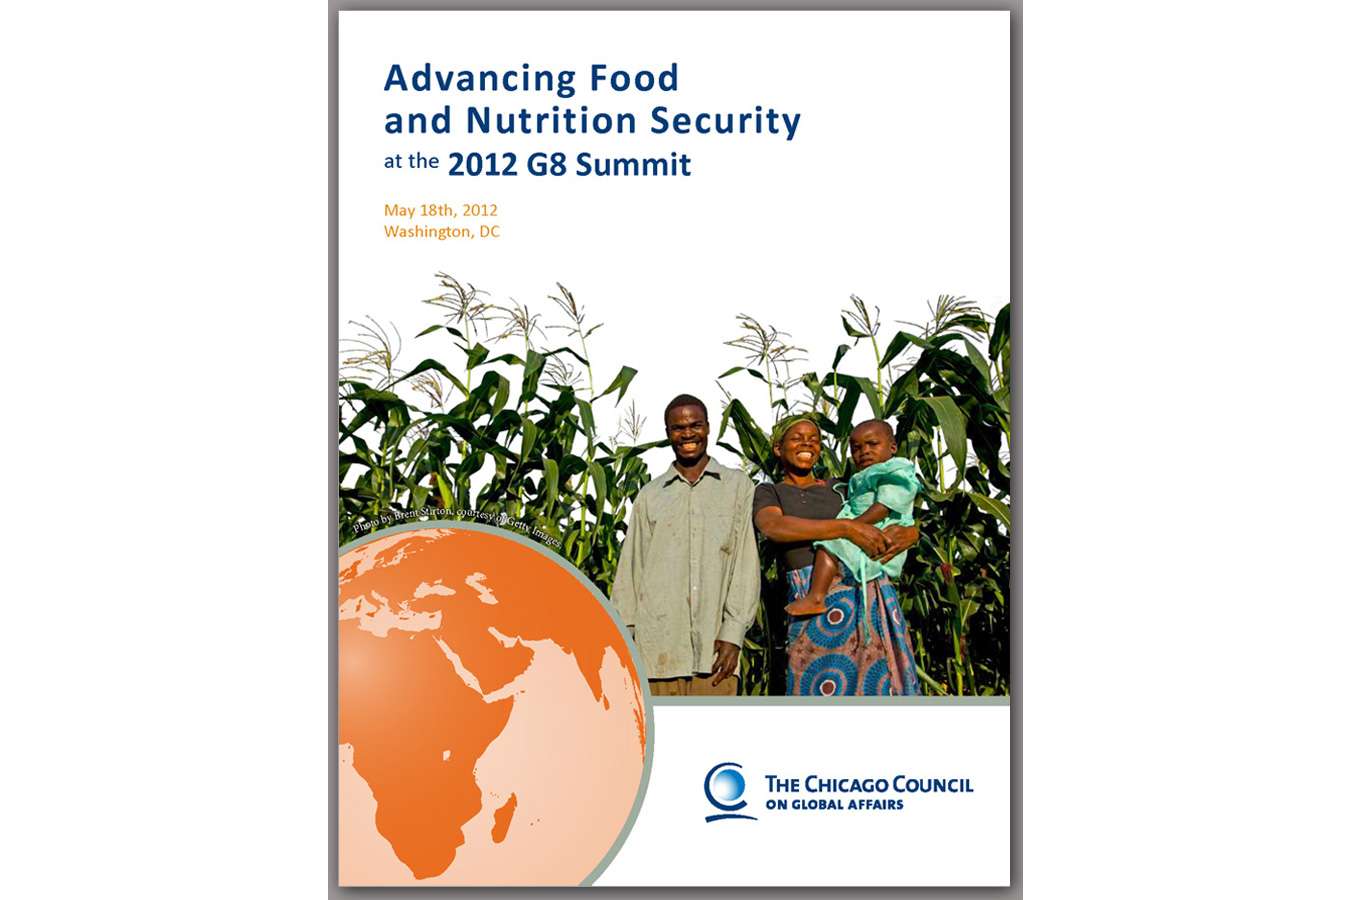 ccg8_6_cover : Symposium Agenda Cover